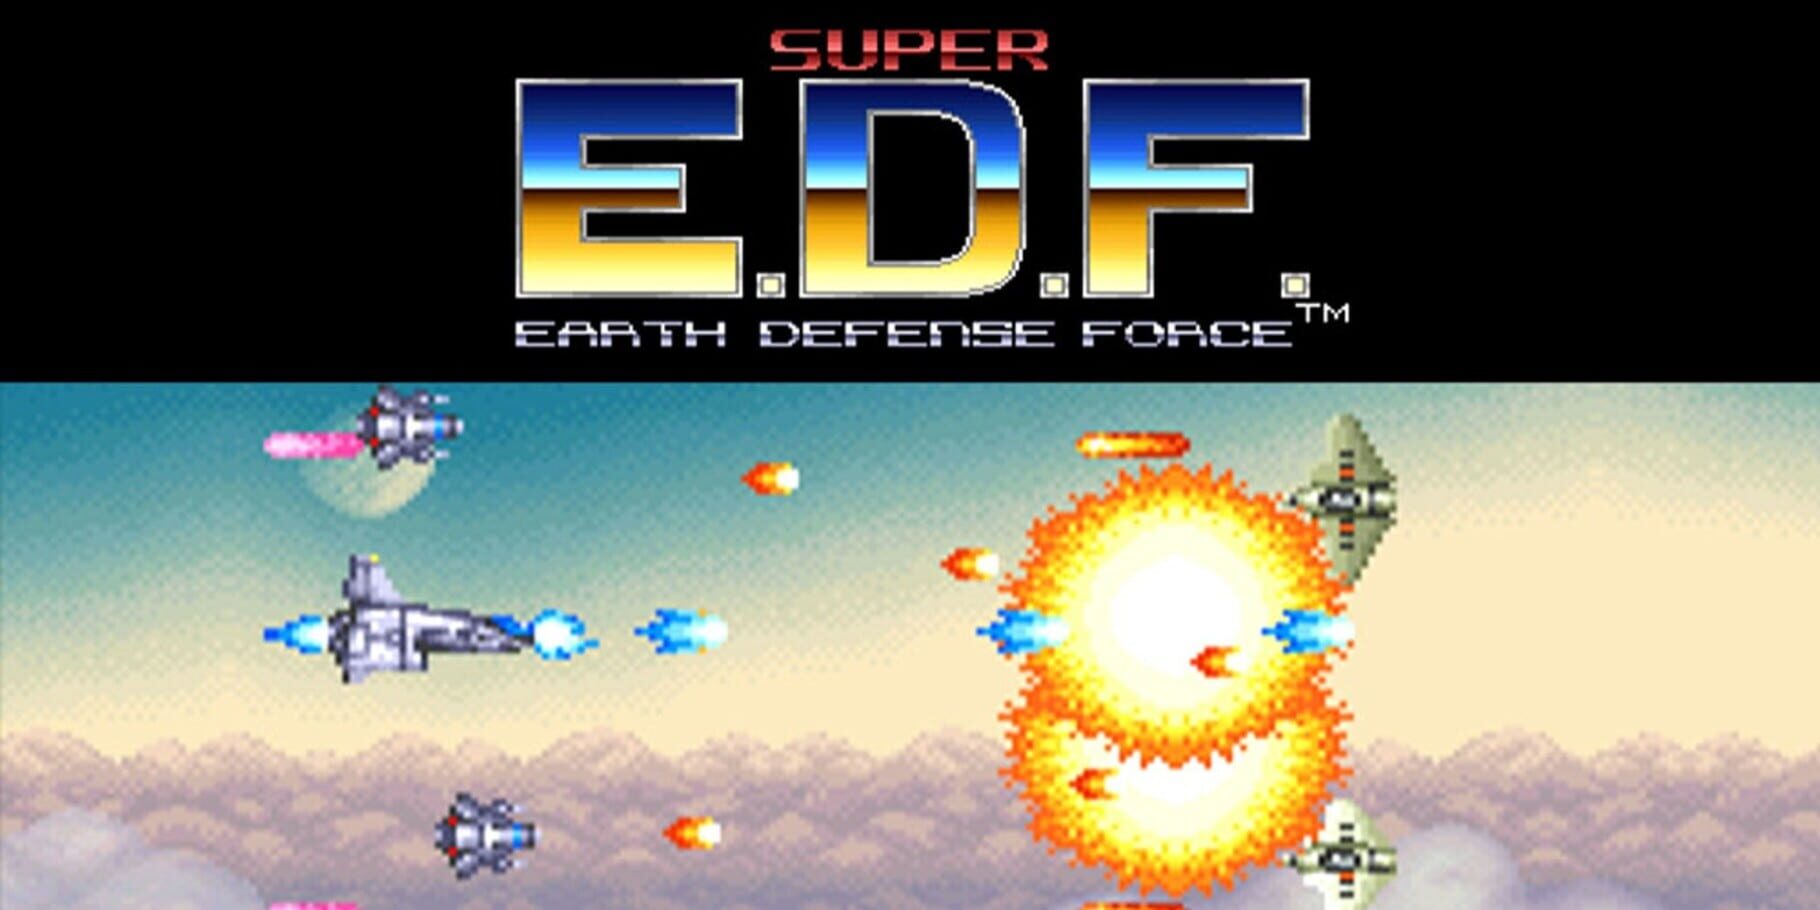 Earth Defense Force artwork